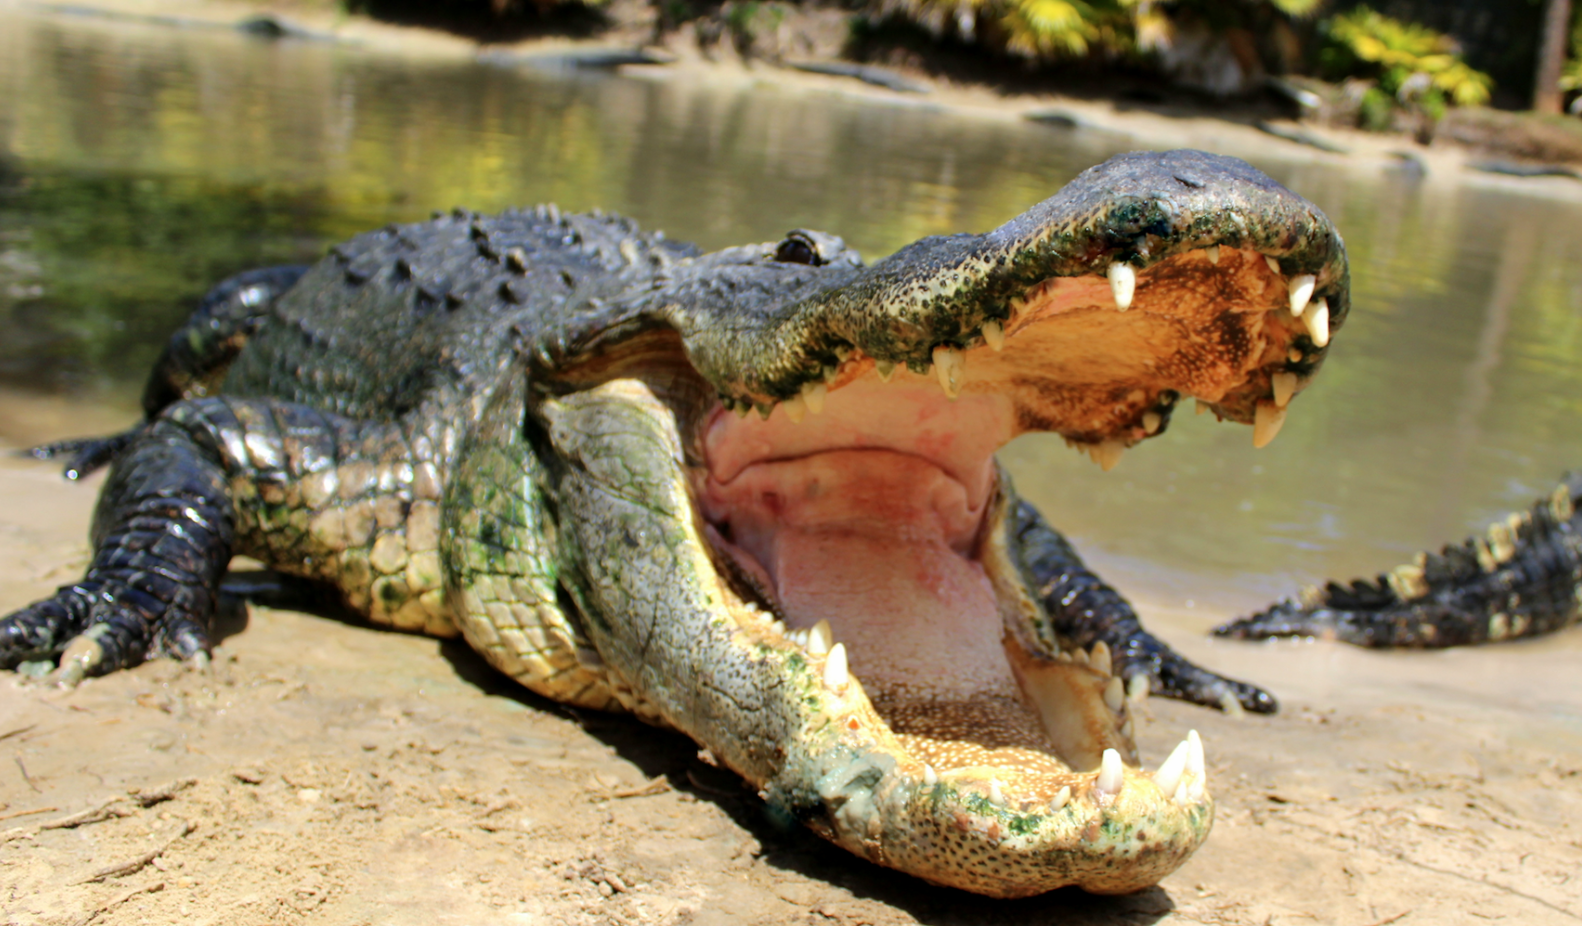 Things to do Orlando: image of Florida alligator at Wild Florida attraction near Orlando